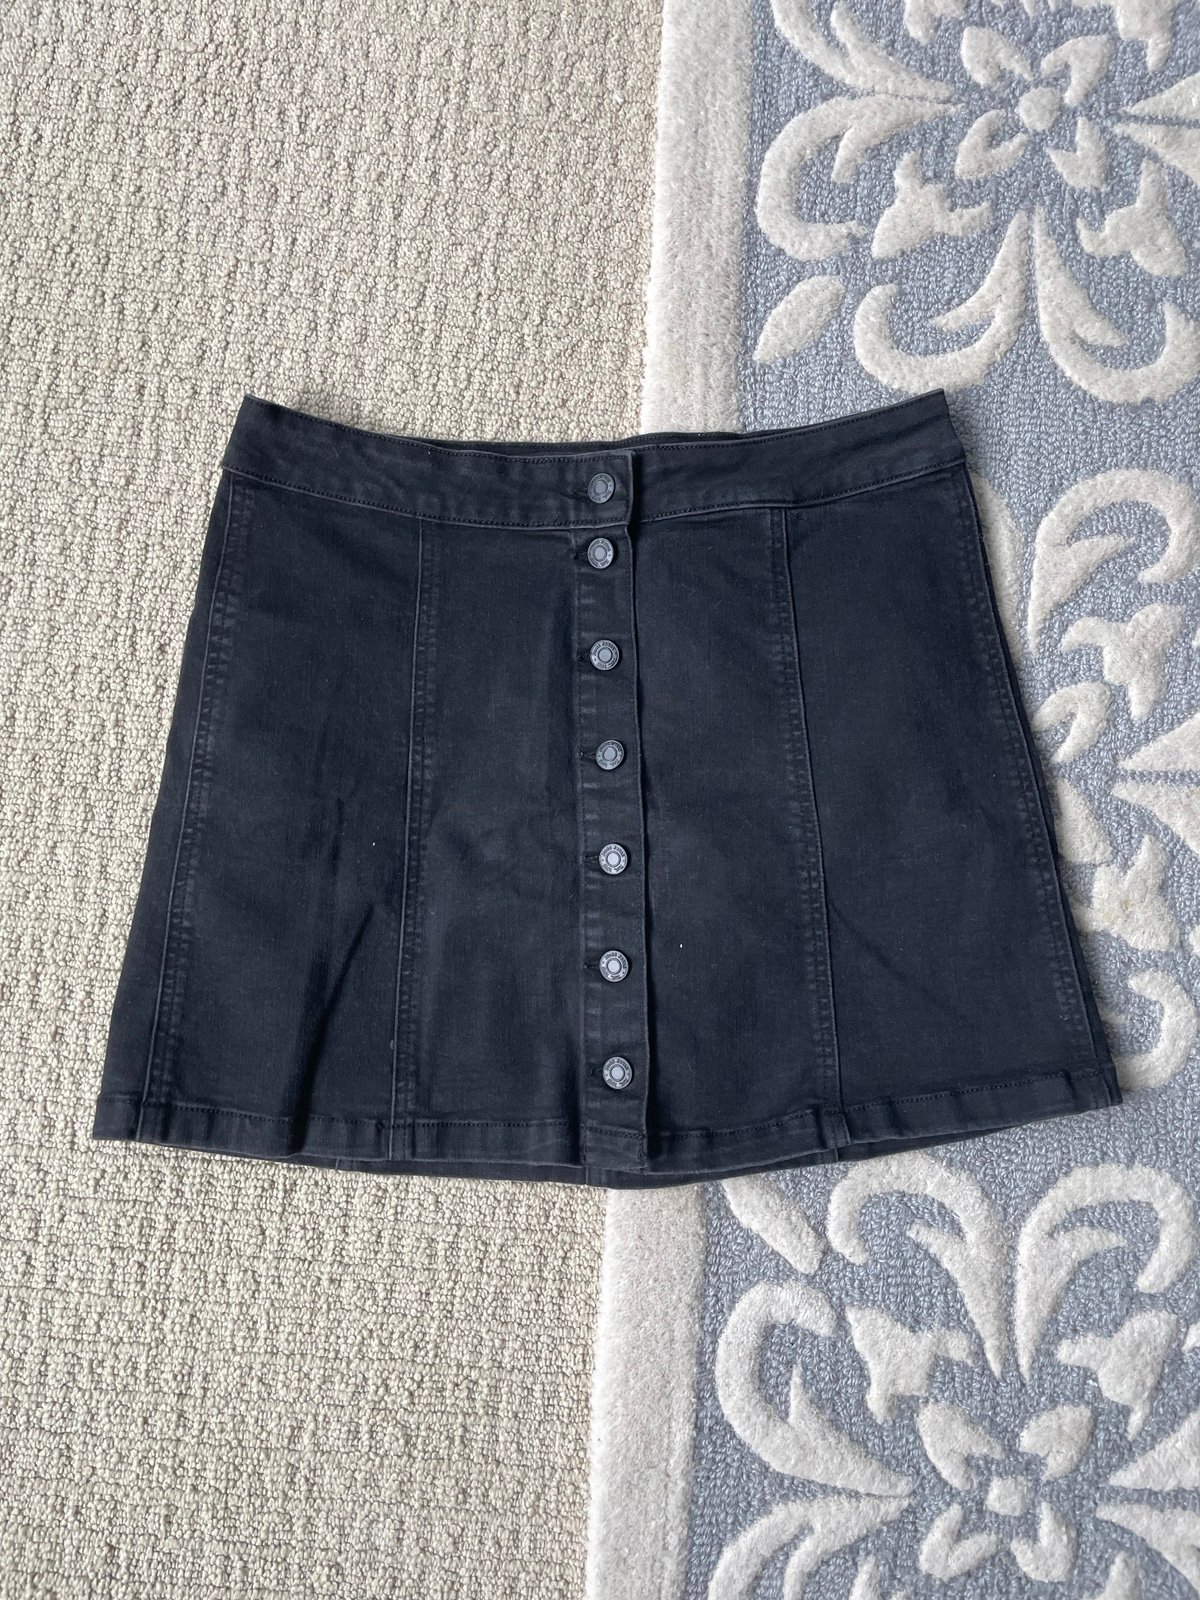 Special offer  Mudd black jean mini skirt nXXCrb85s Great